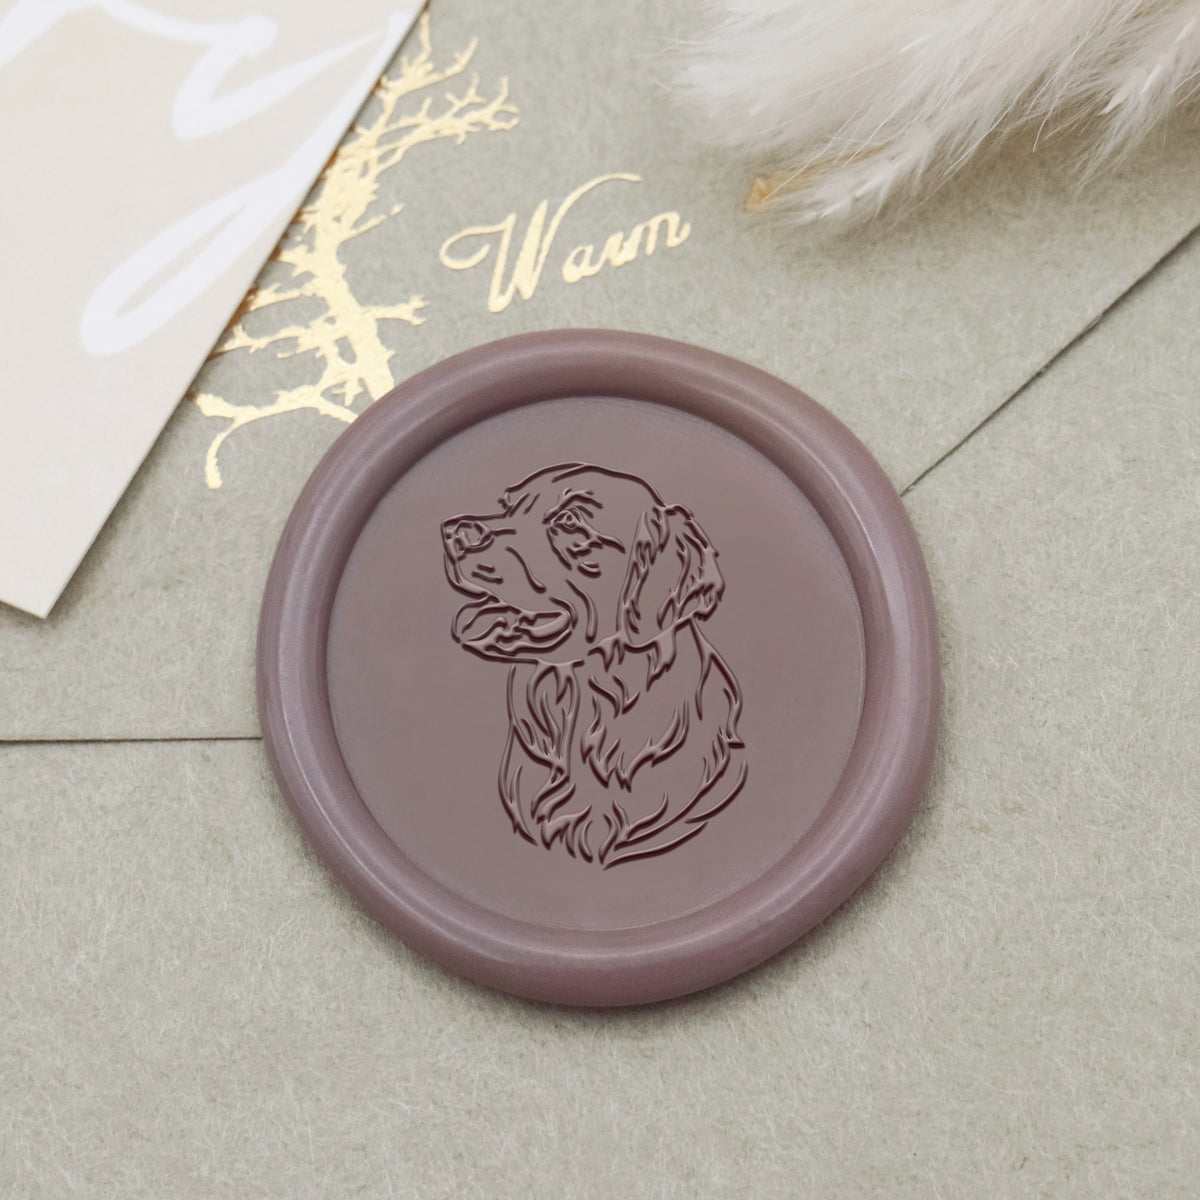 Golden Retriever Dog Wax Seal Stamp - Stamprints1